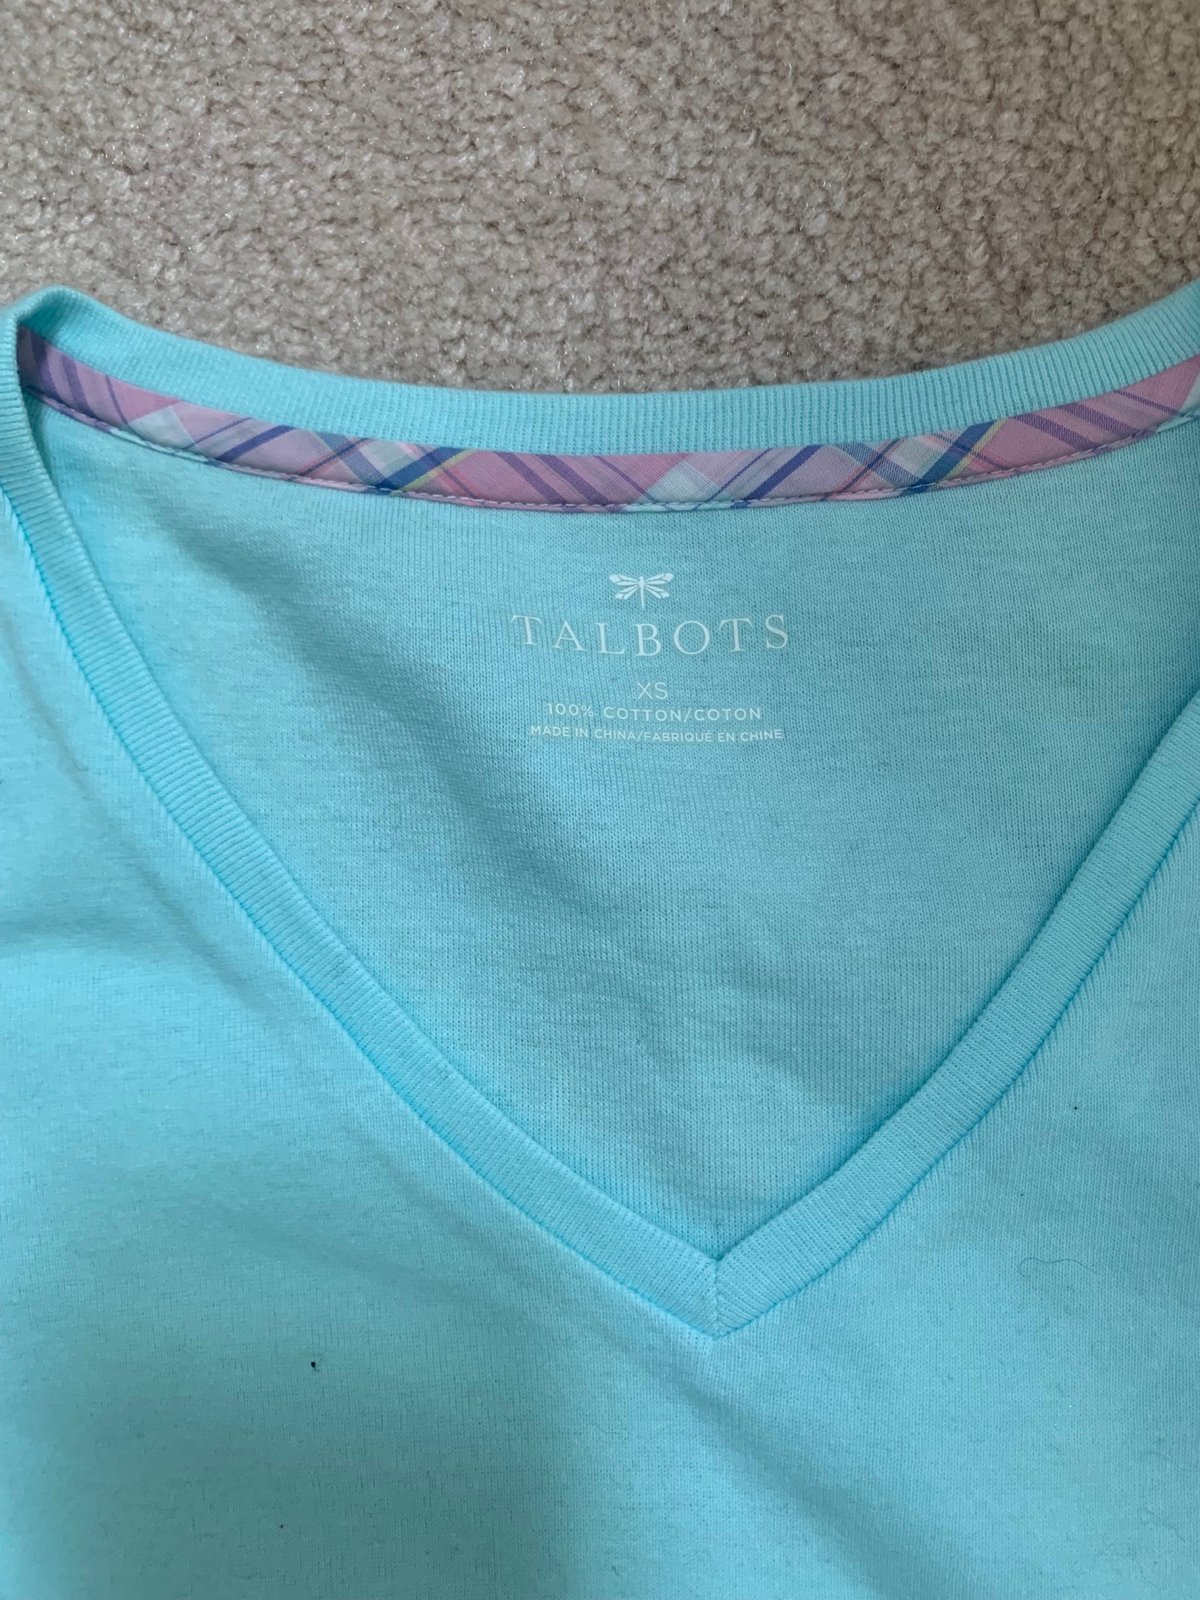 Latest  Talbots Pajama Set pMuIO7LGc Outlet Store